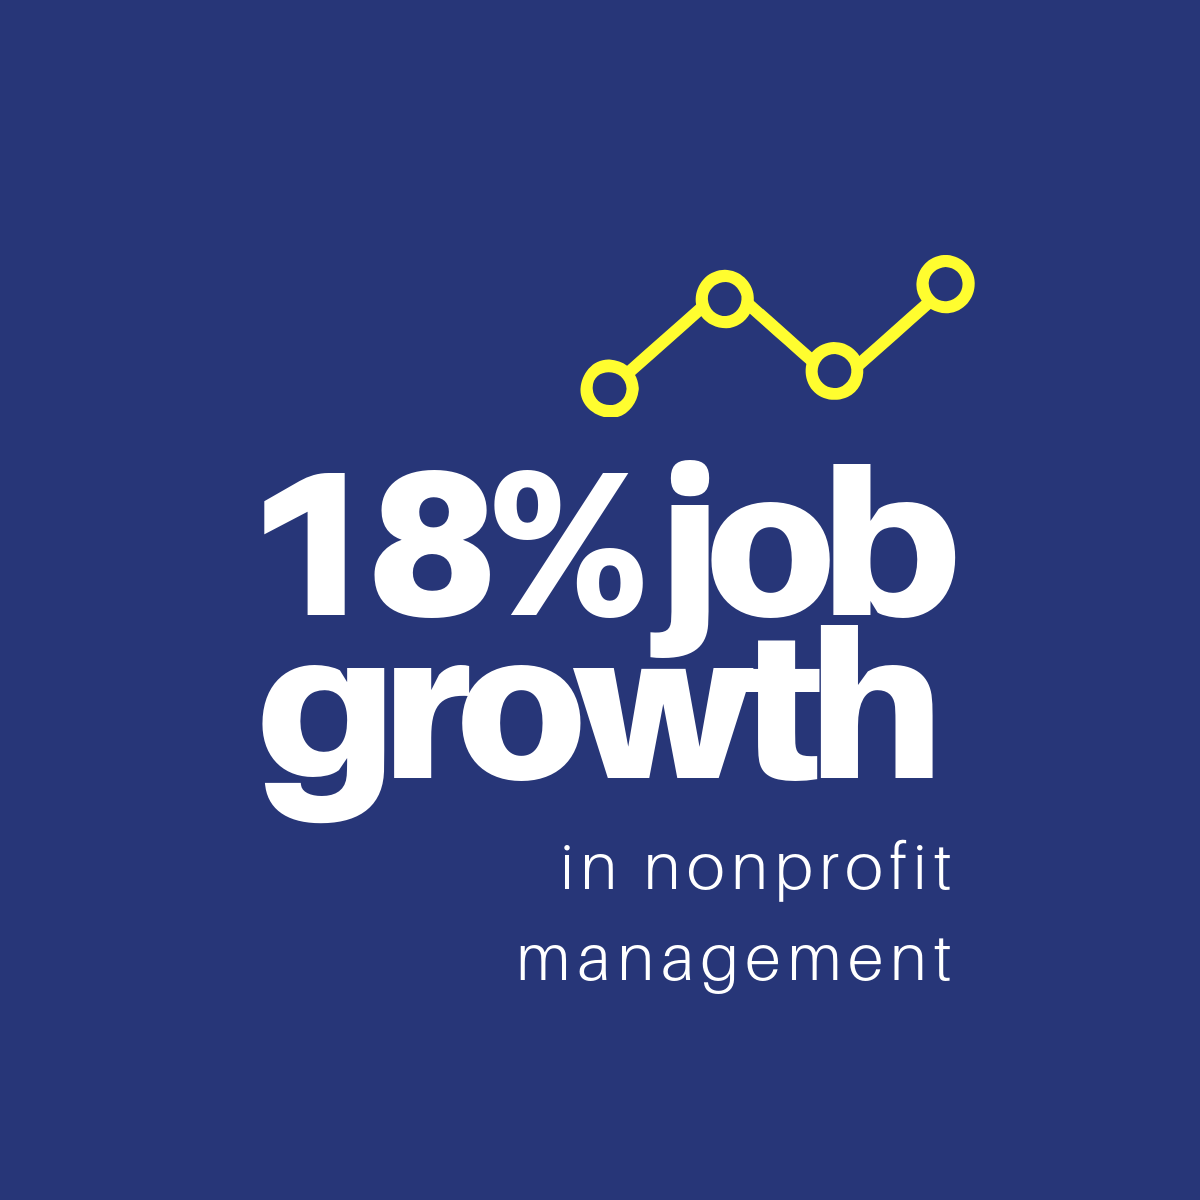 18% job growth in nonprofit management